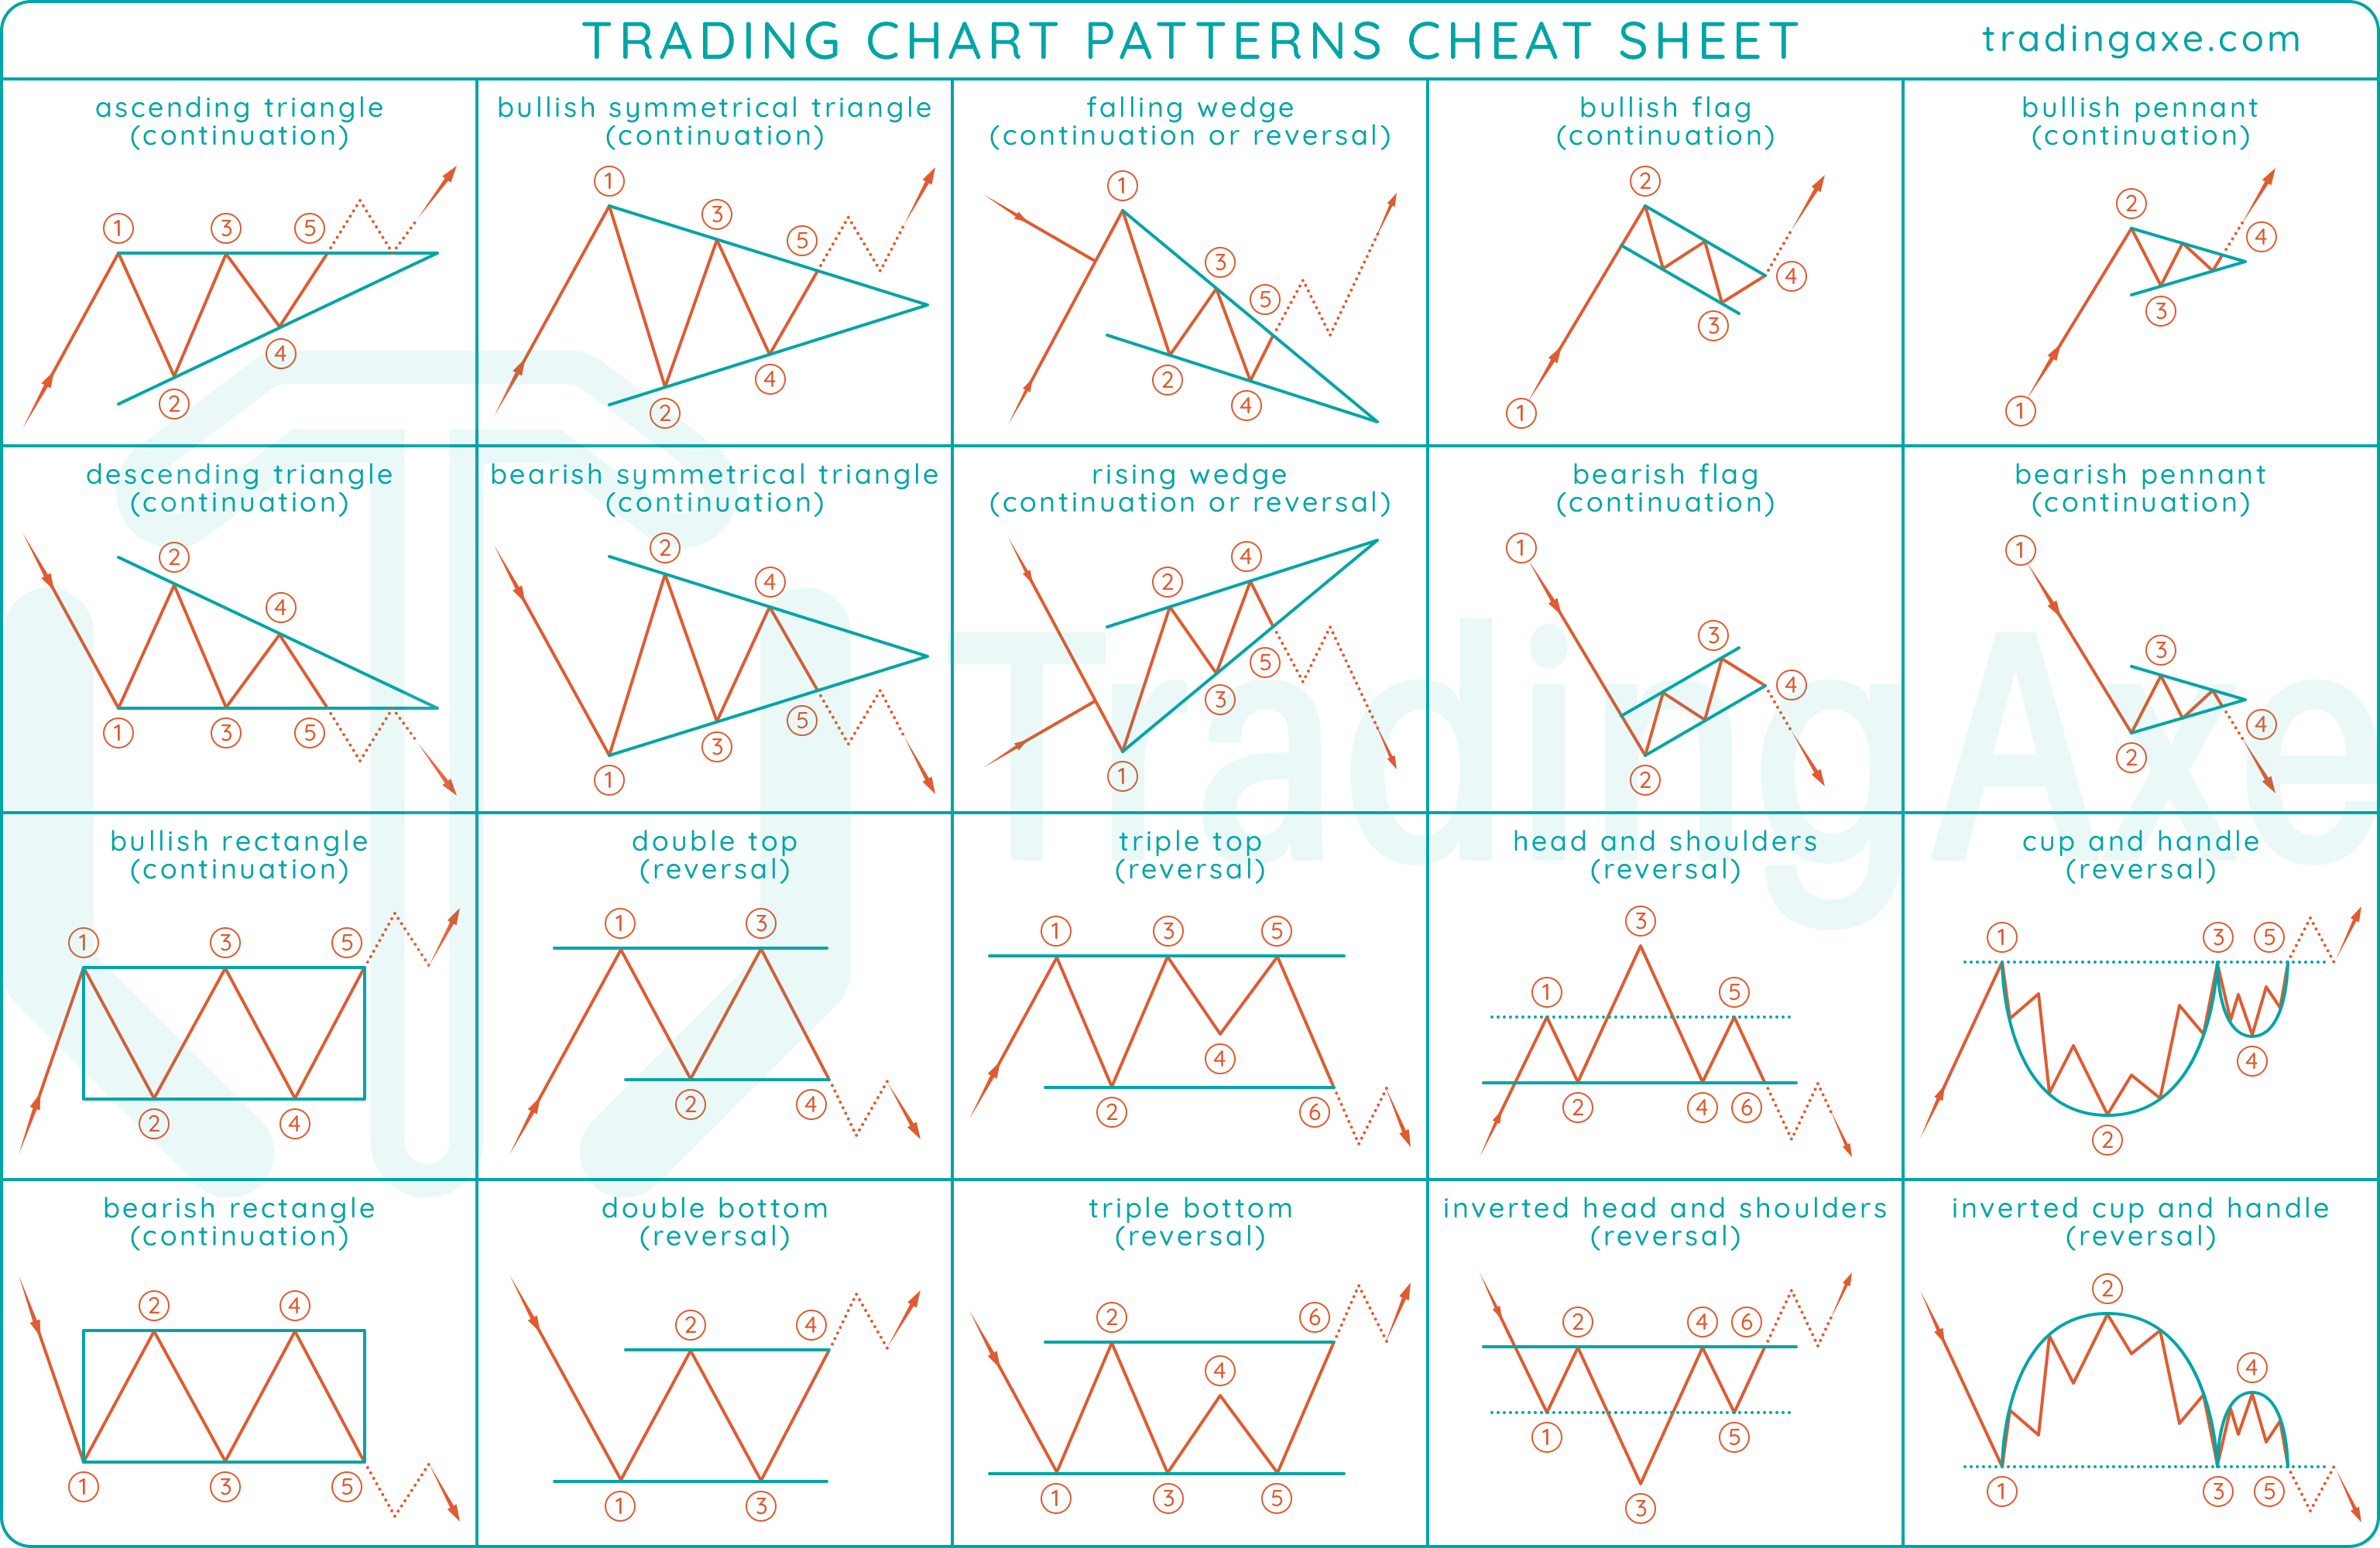 Trading chart patterns cheat sheet infographic